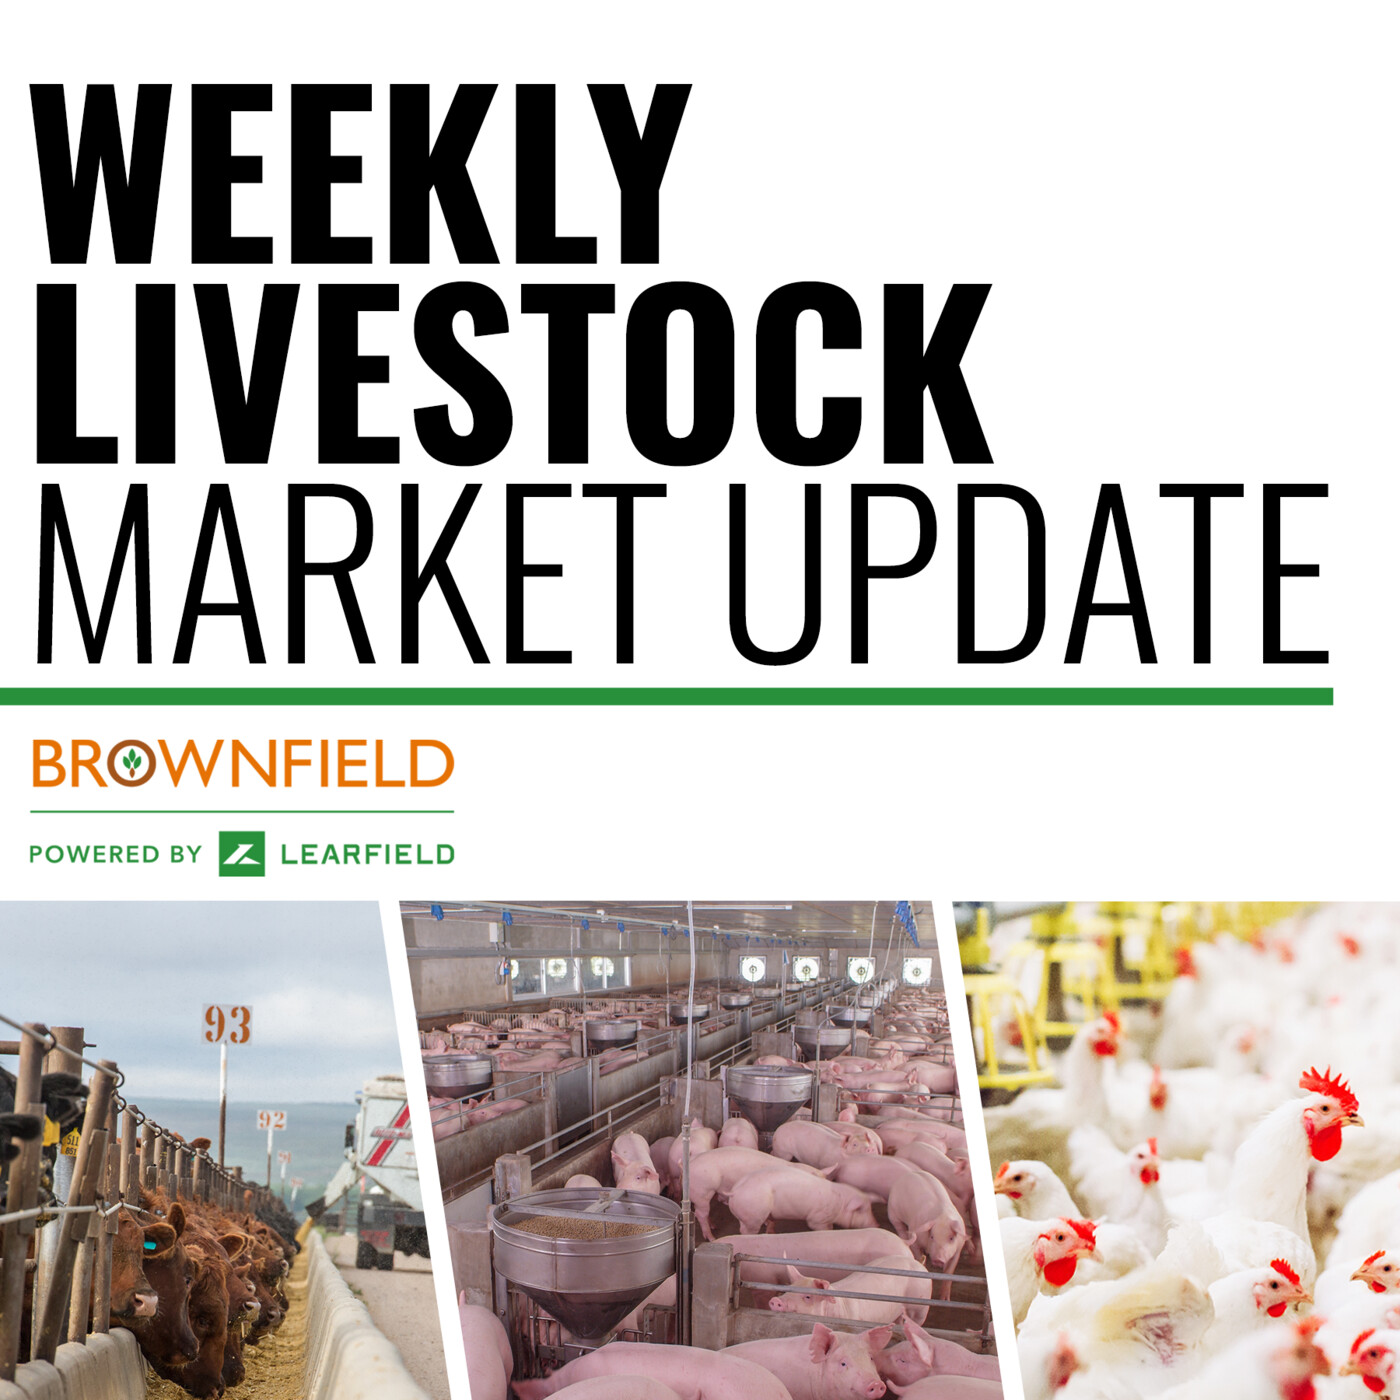 Brownfield's Weekly Livestock Market Update cover art